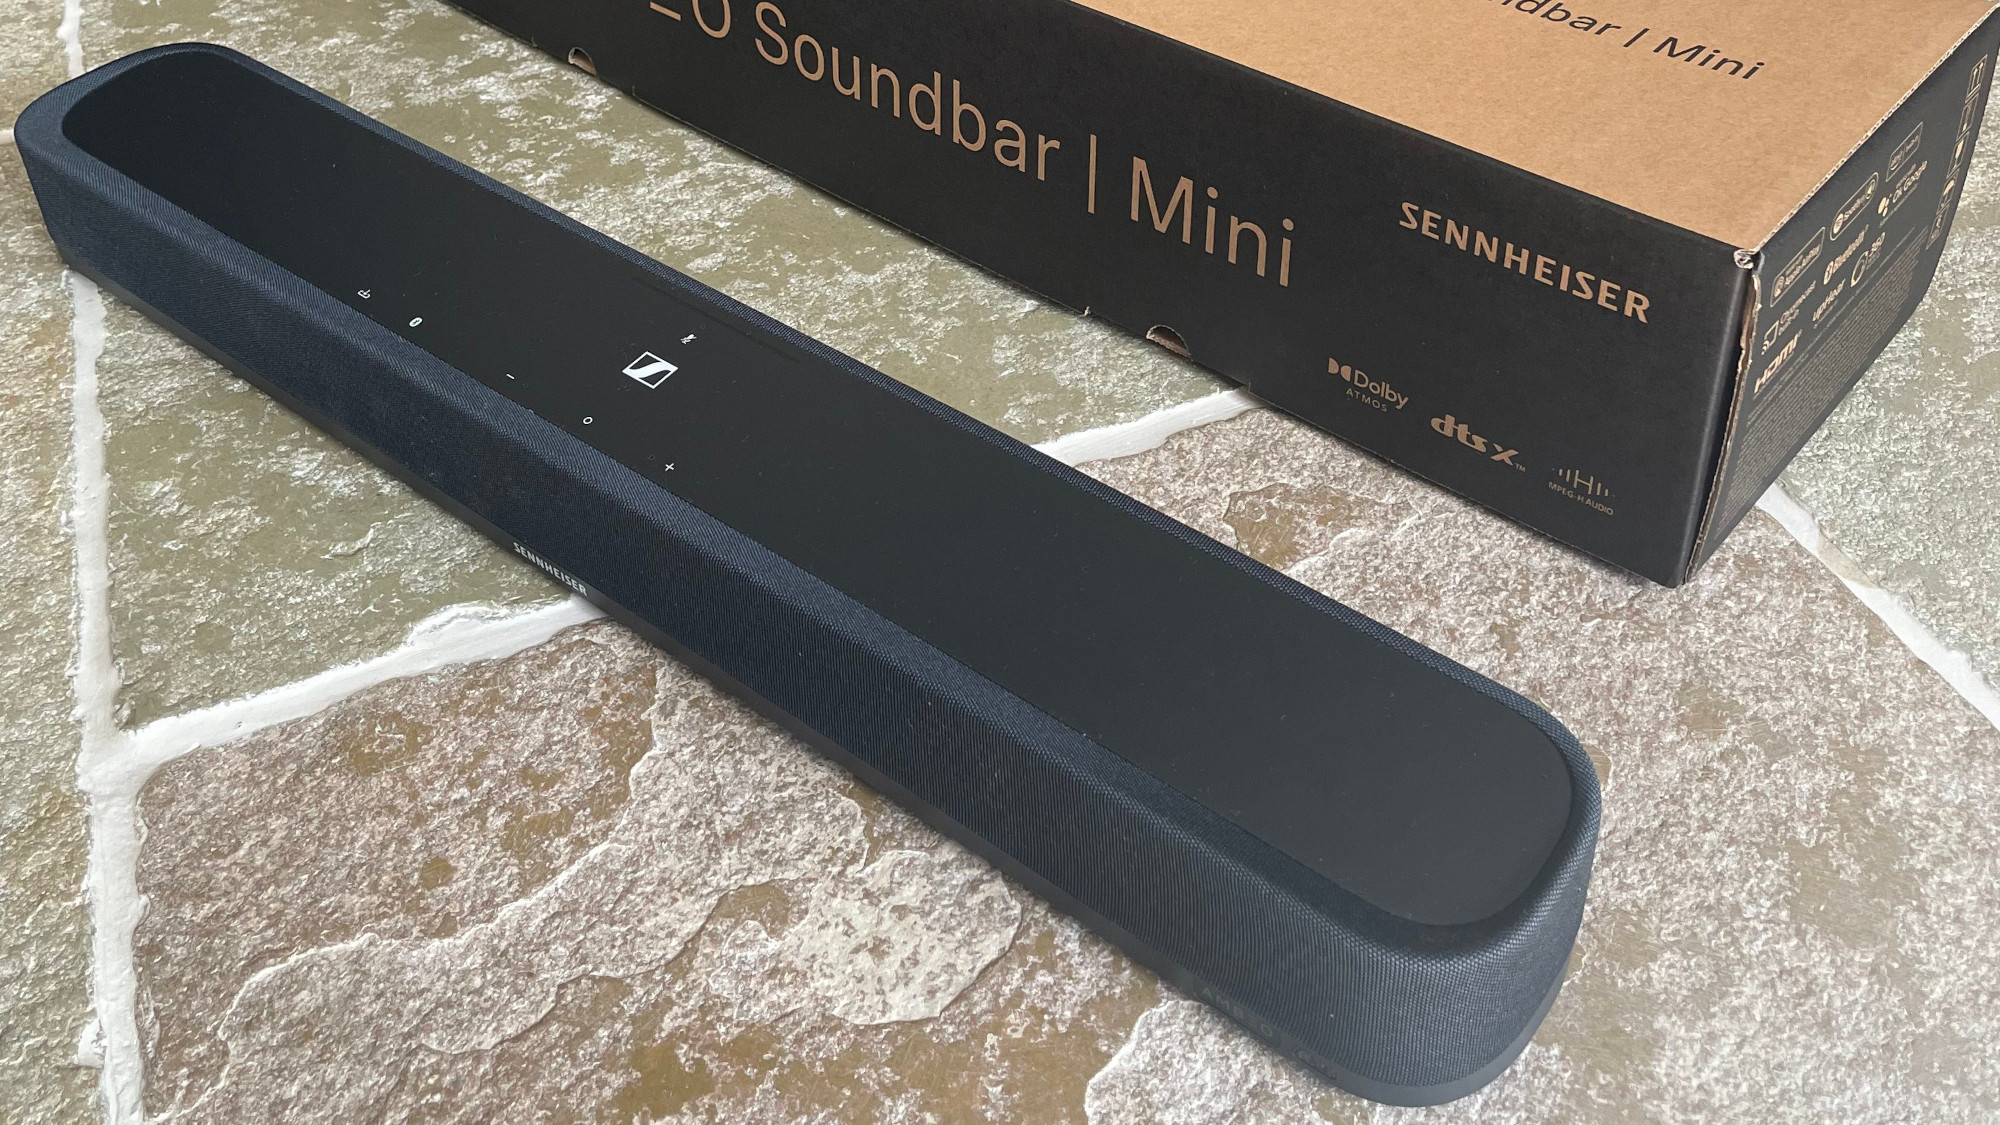 Sennheiser Ambeo Soundbar on floor with packing box